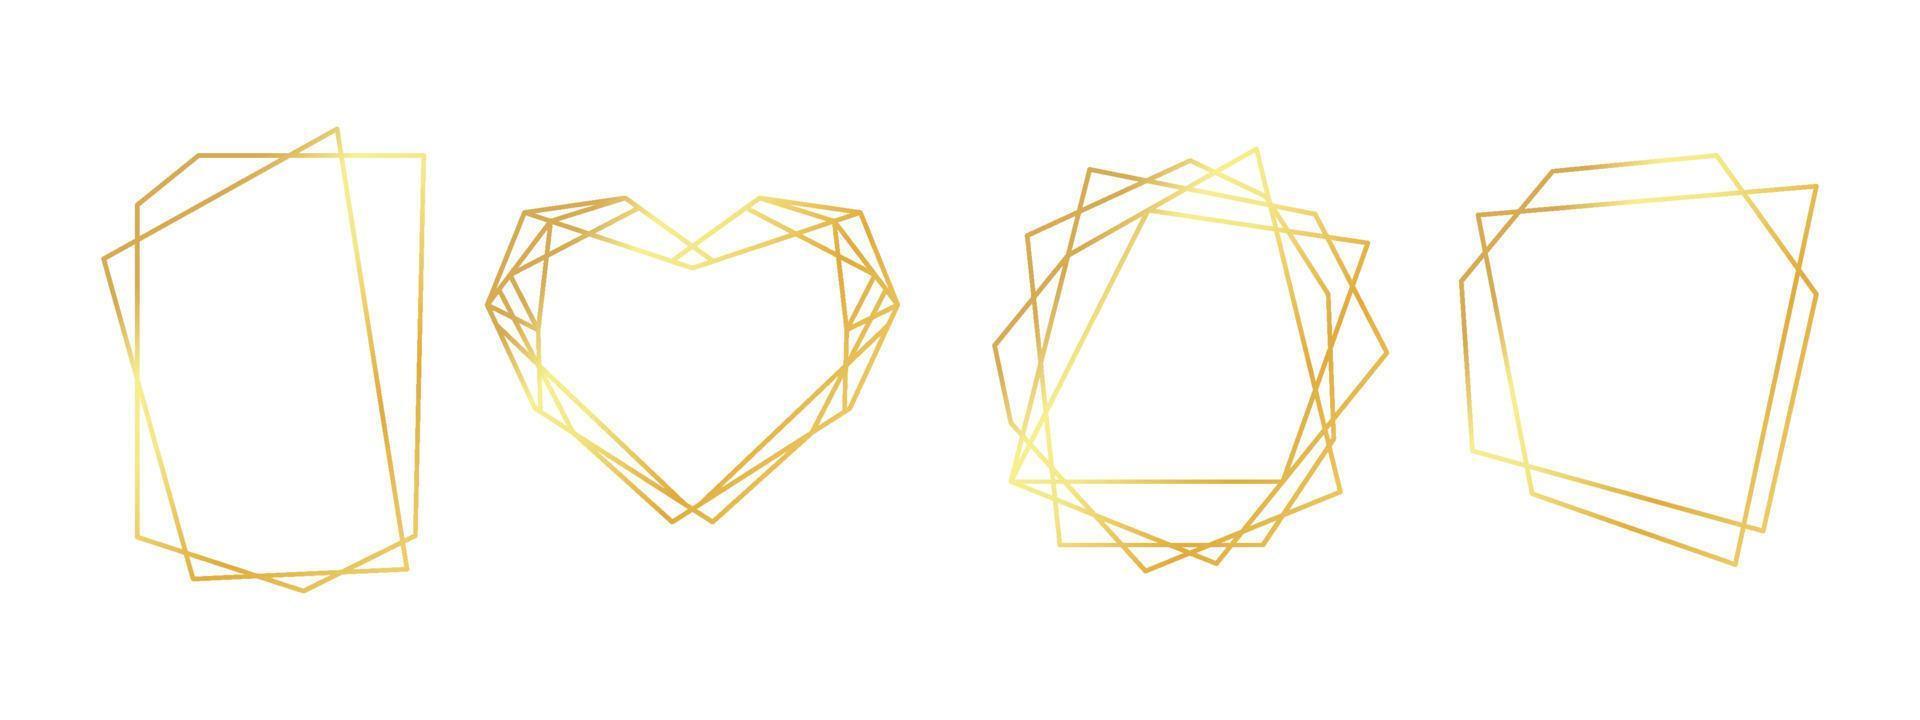 dorado poligonal fronteras geométrico Boda marcos aislado en blanco antecedentes vector